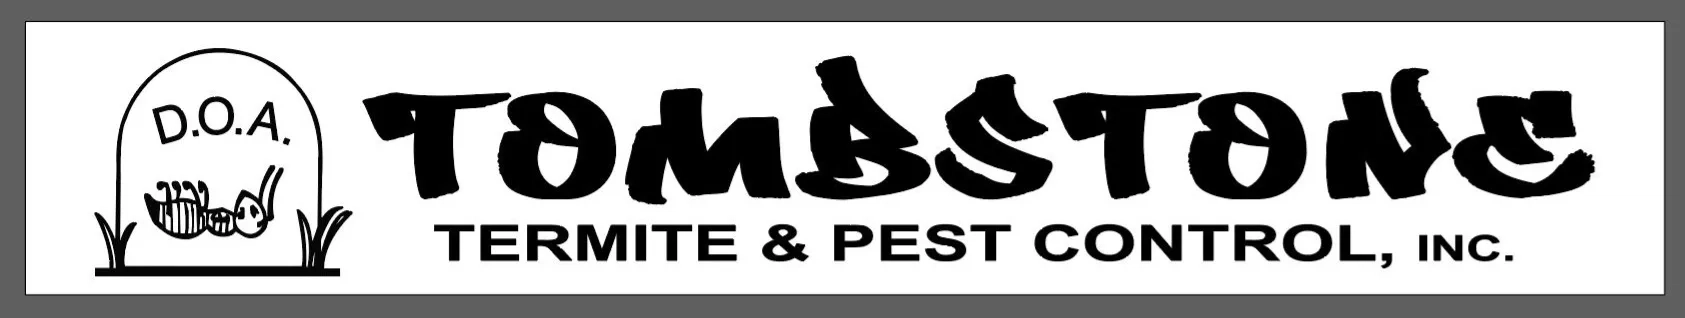 Tombstone Termite & Pest Control Inc Logo